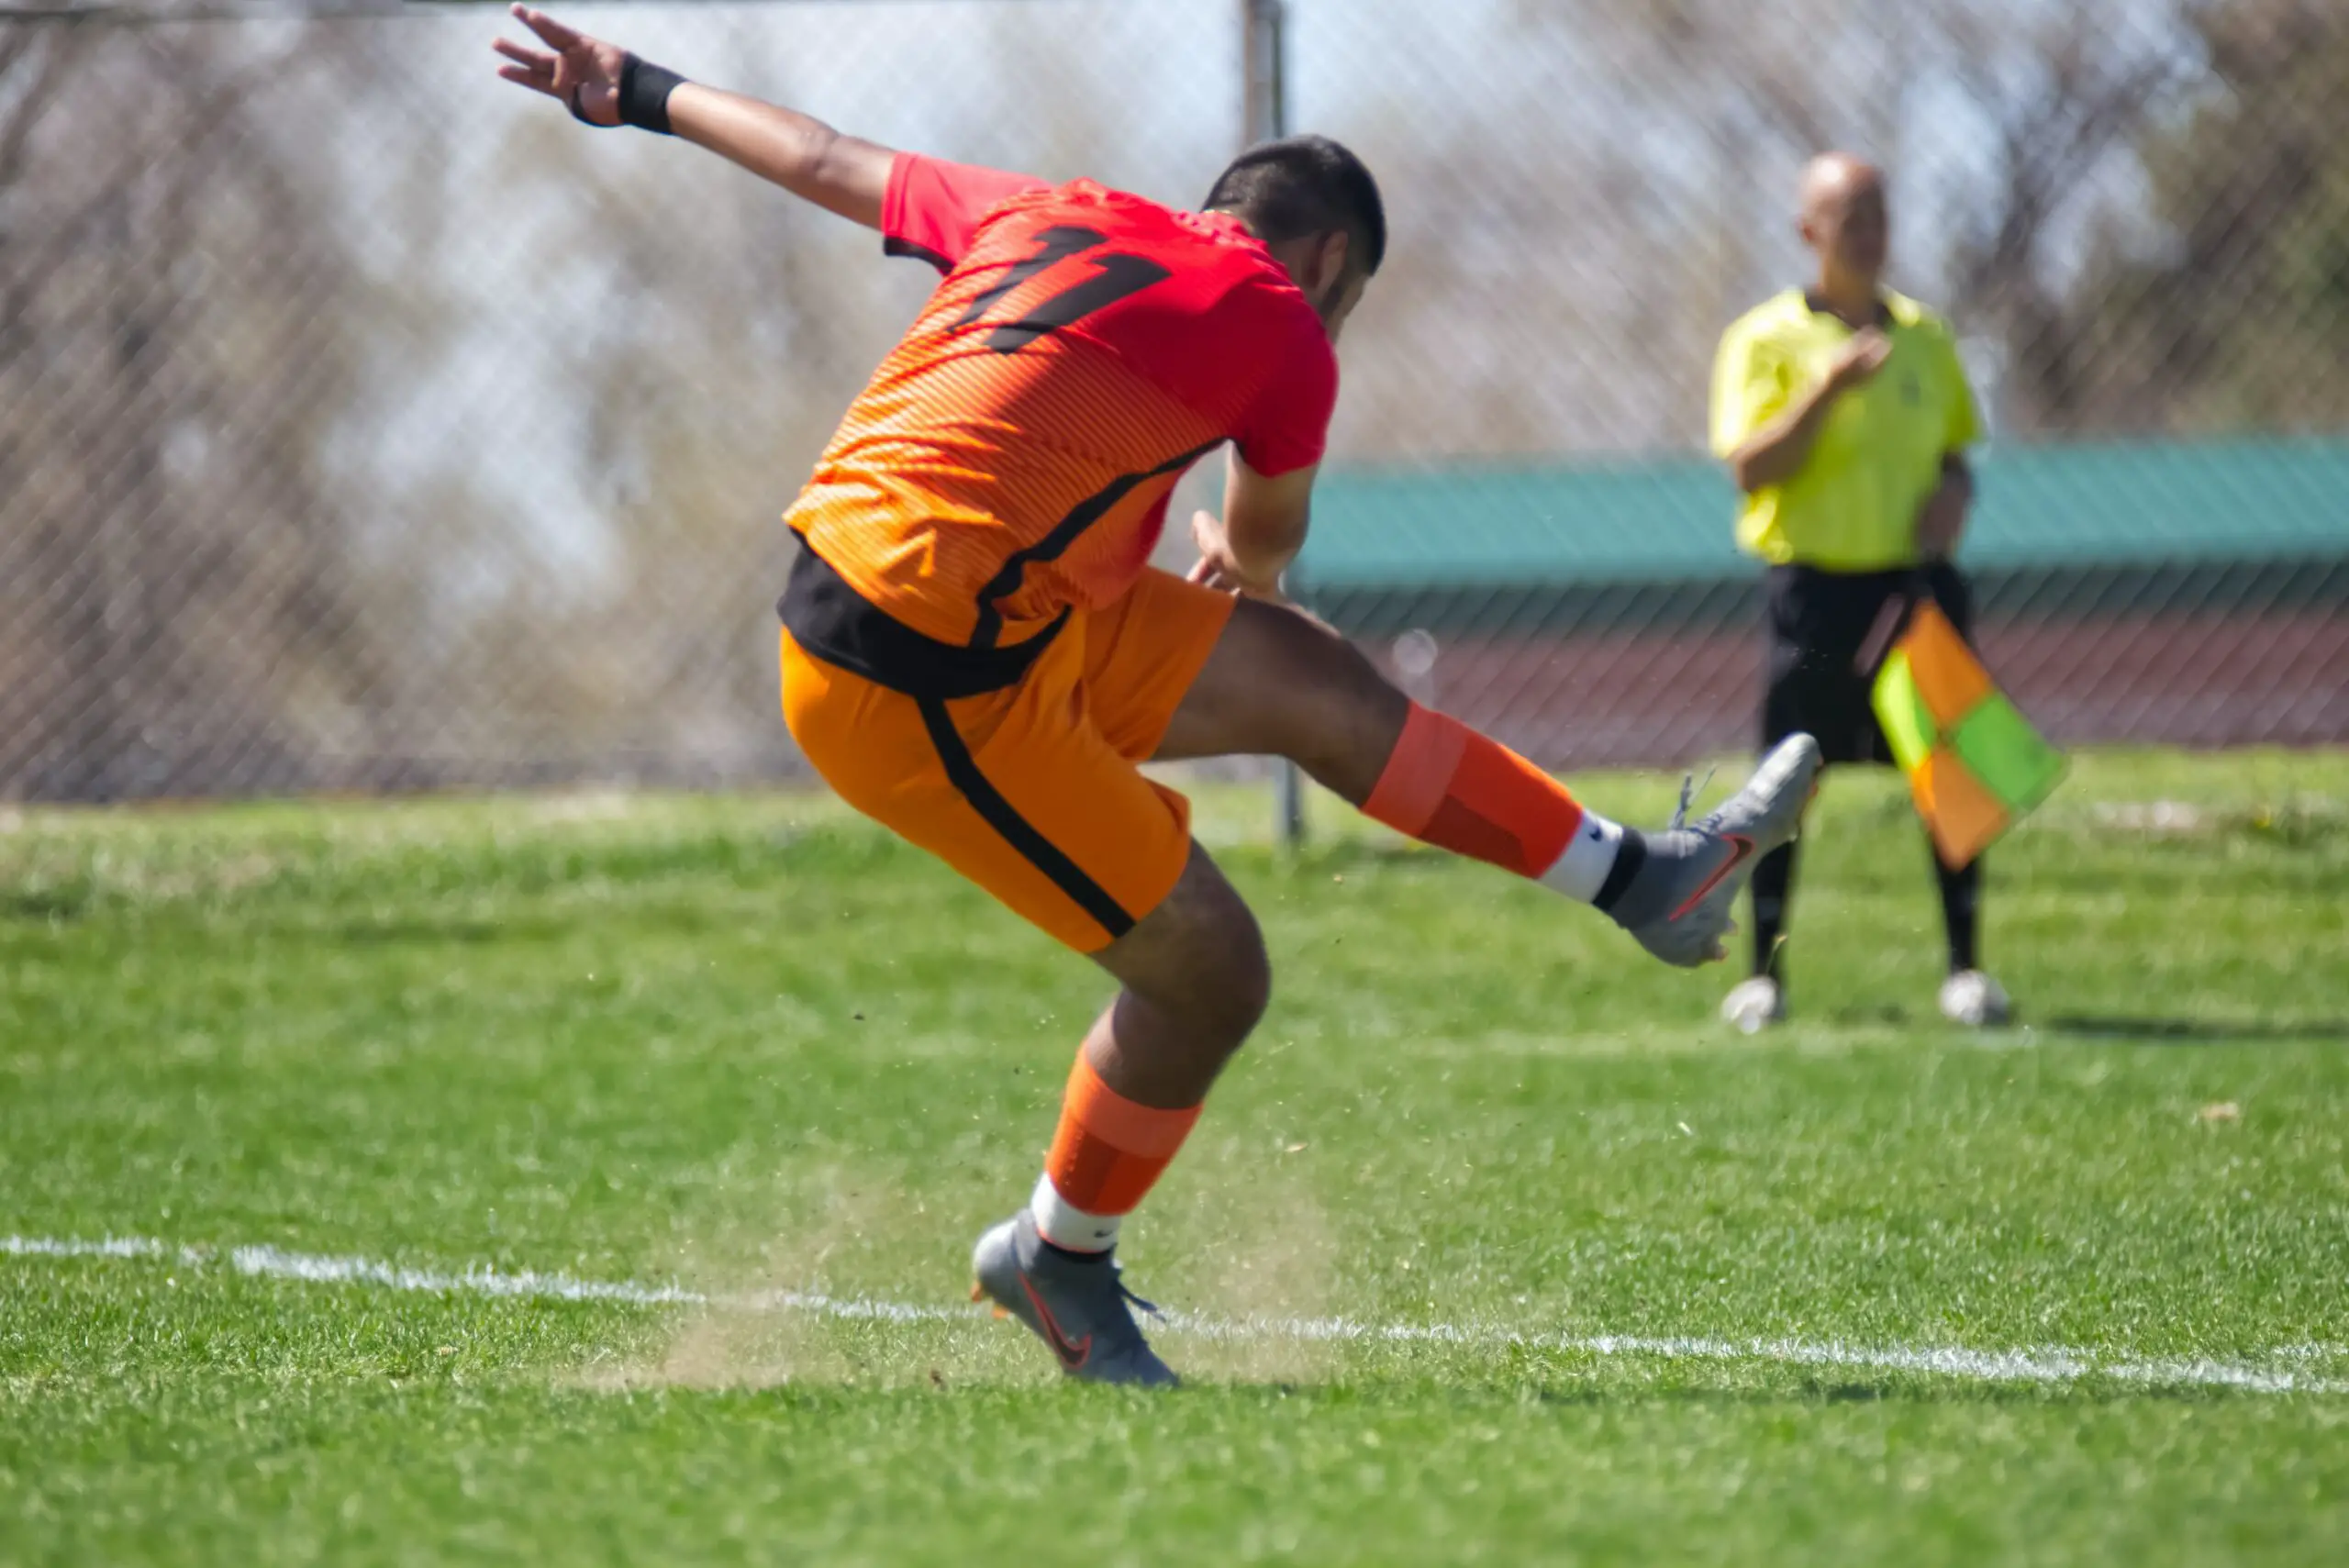 A footballer kicking a football hard